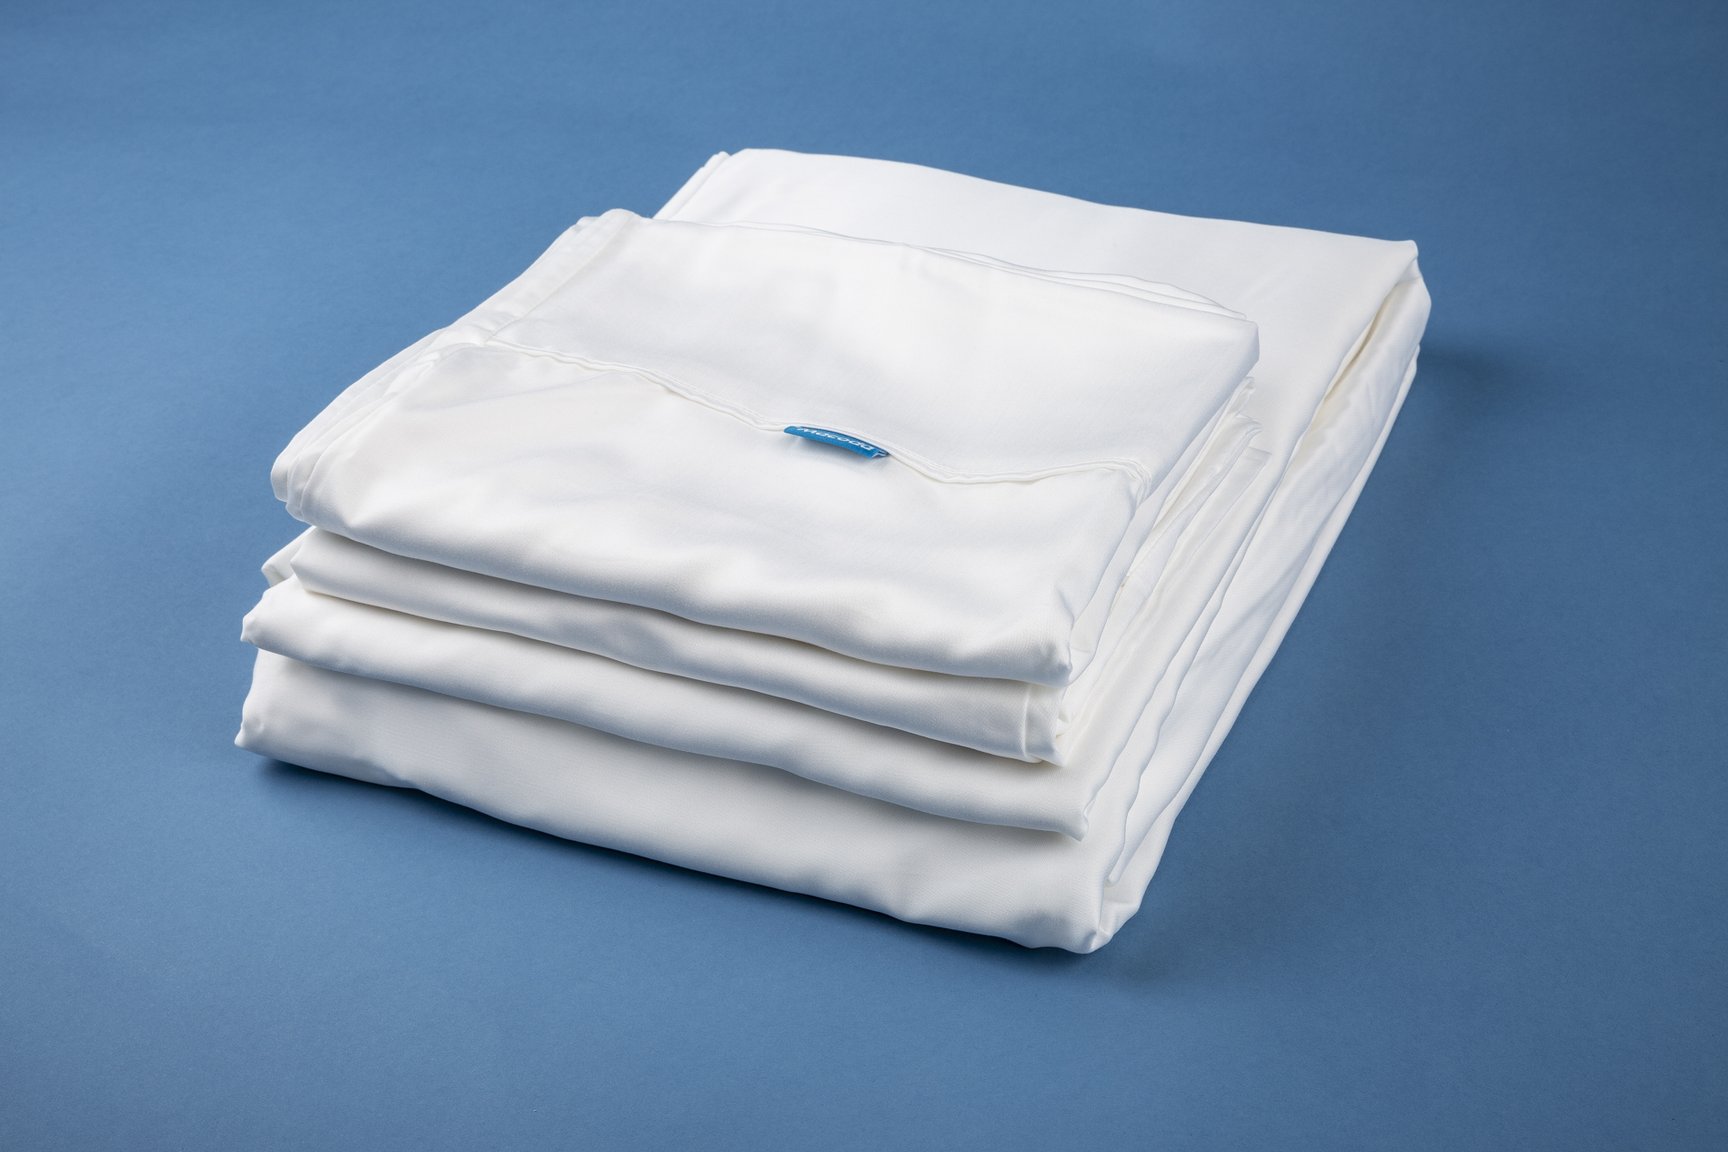 Get free sheet or Duvet set when you purchase a mattress